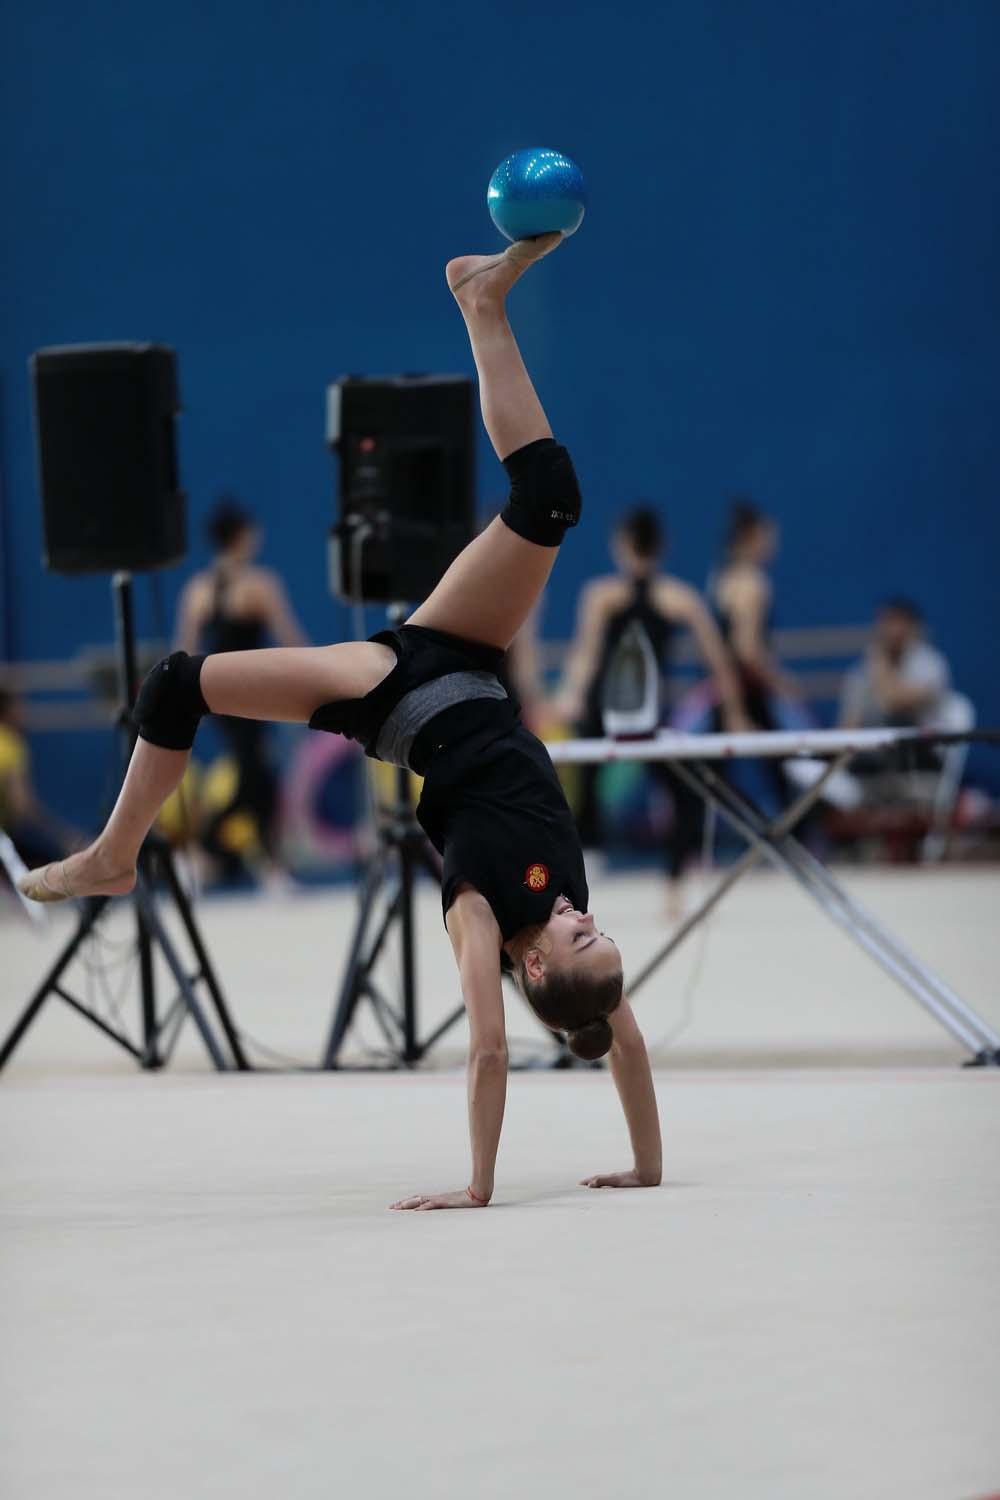 Podium training held in Baku for upcoming Rhythmic Gymnastics World Cup (PHOTO)